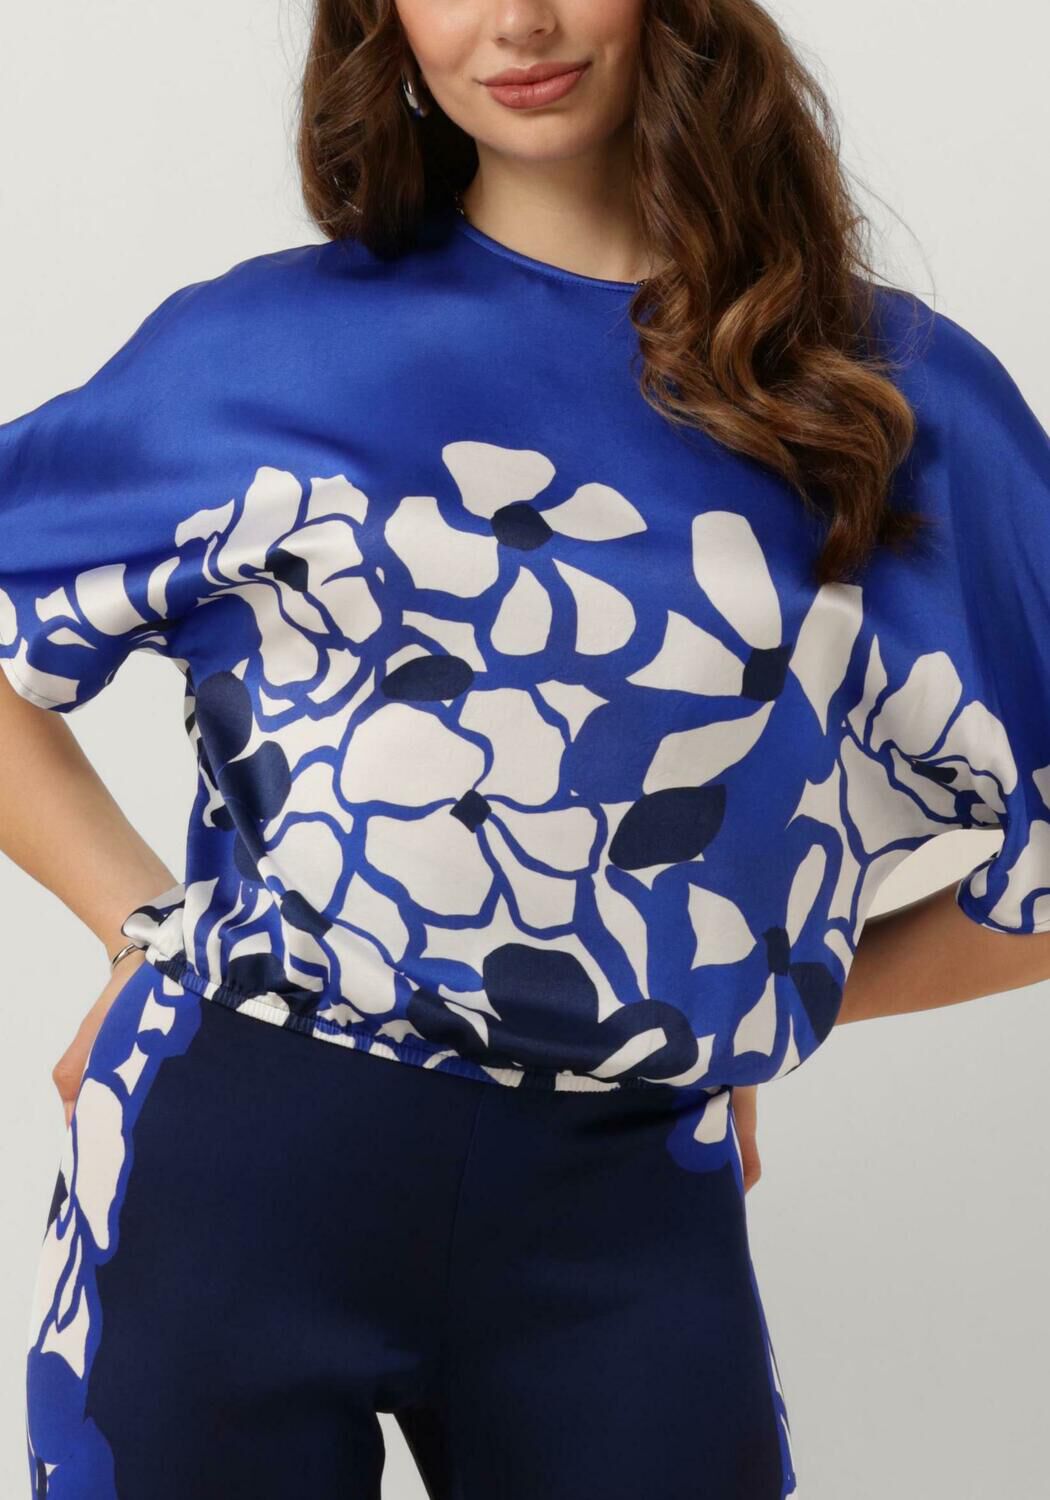 CAROLINE BISS Dames Tops & T-shirts 1610 29 Blauw